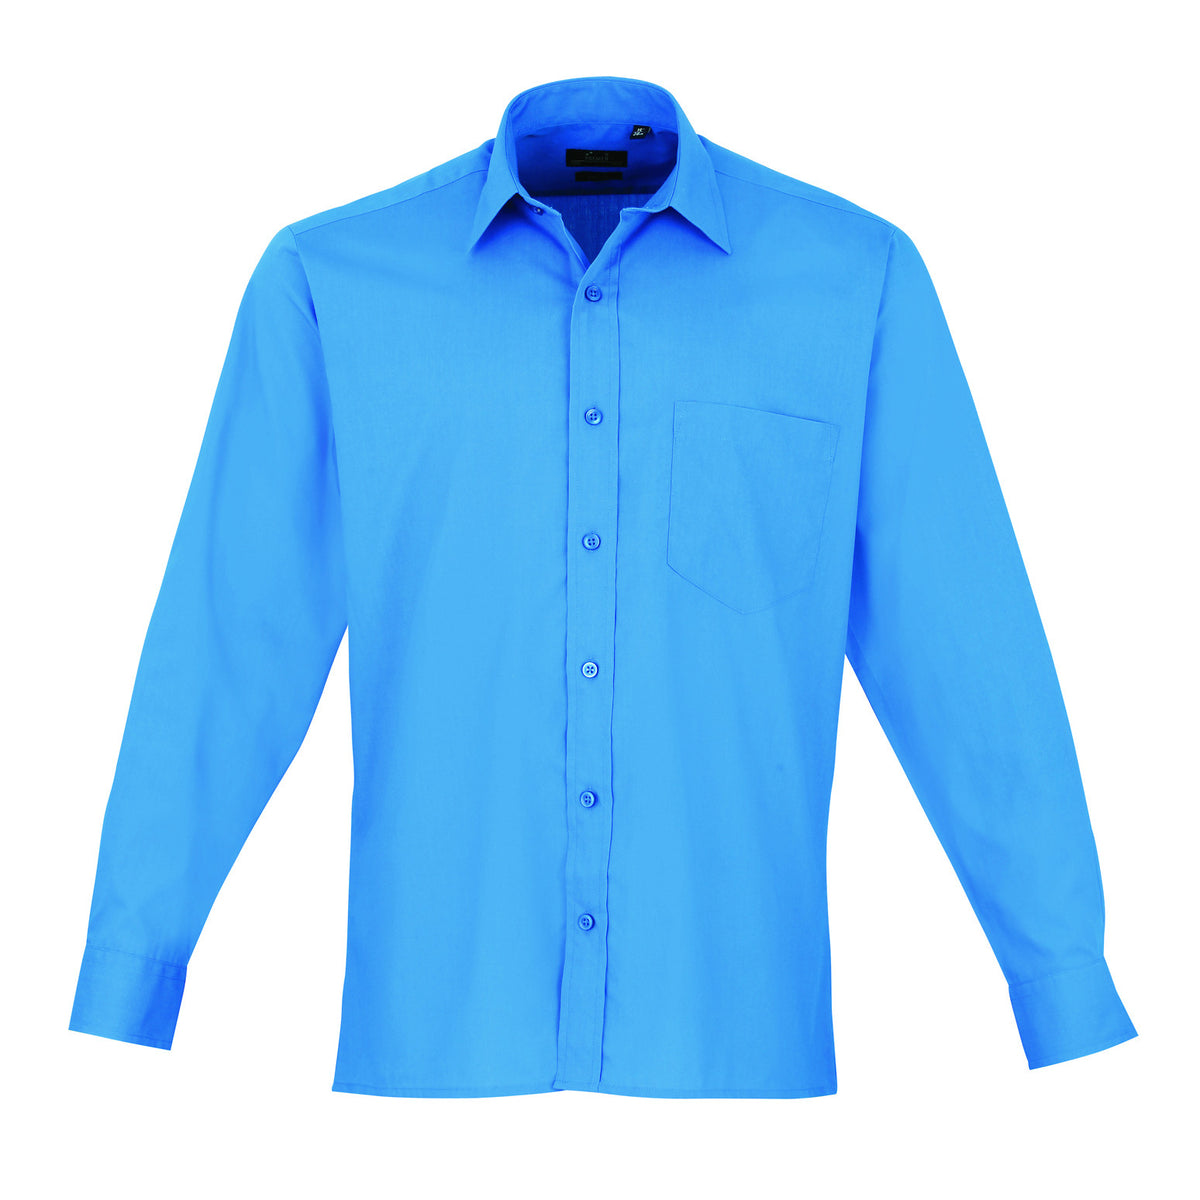 Premier Poplin Shirts (Sapphire, Turquoise, Light Blue, Mid Blue, Royal) - peterdrew.com
 - 7